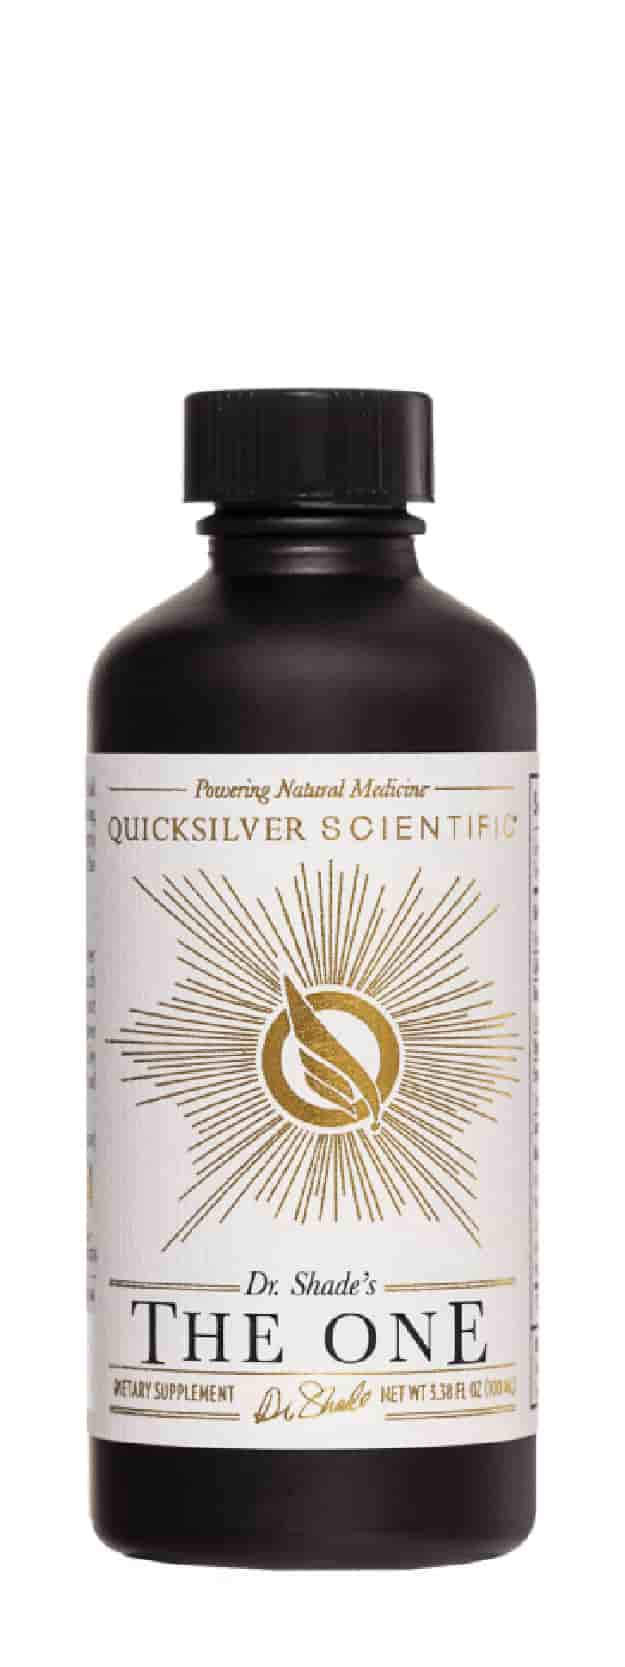 Quicksilver Scientific The One Mitochondrial Optimizer bei LiveHelfi kaufen